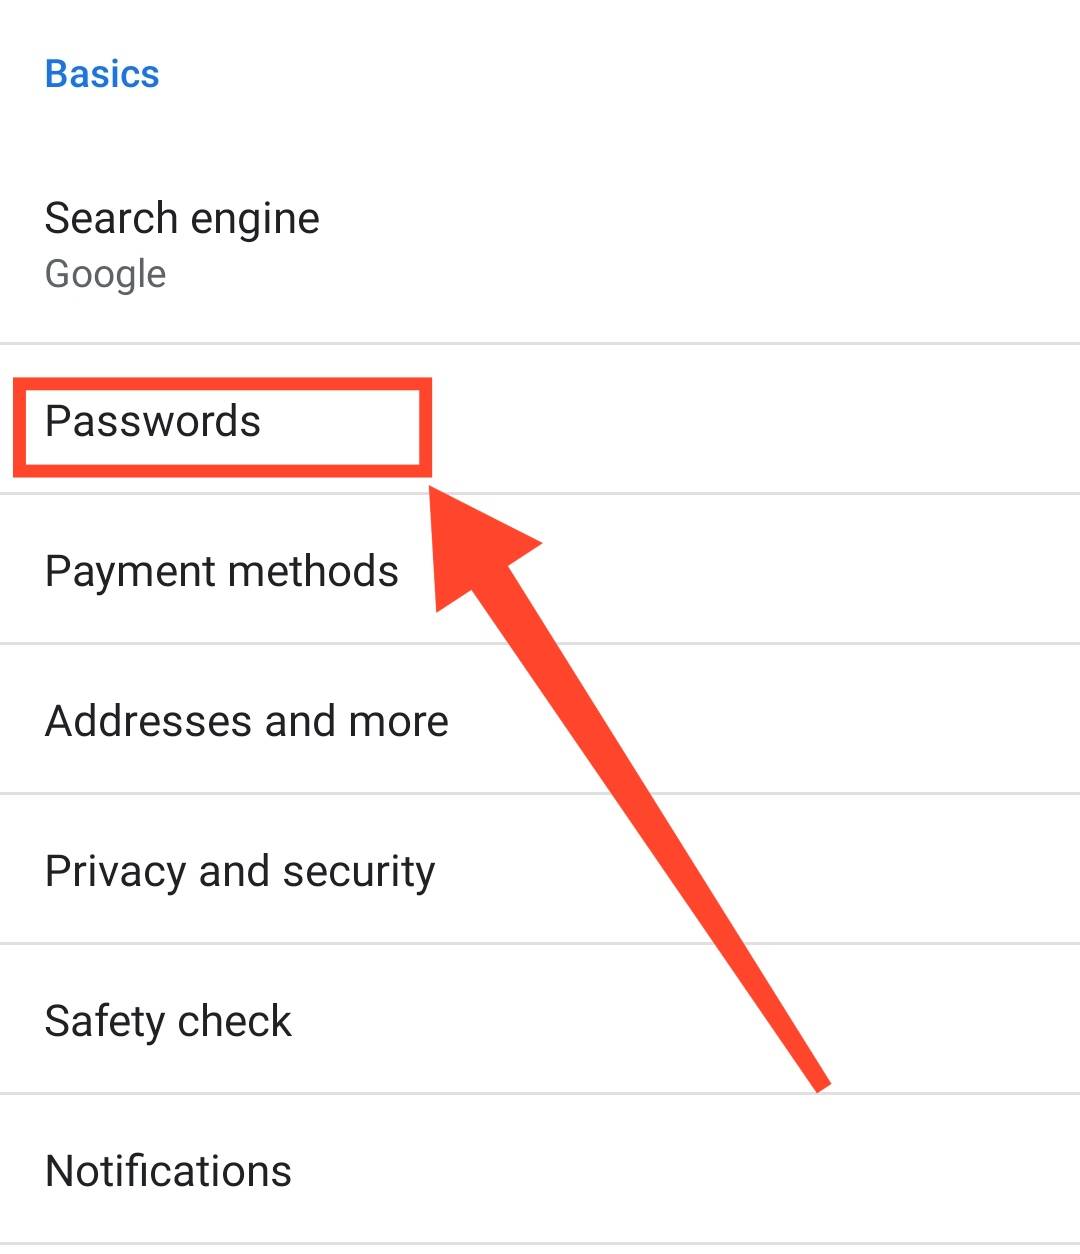 gmail id ka password kaise pata kare